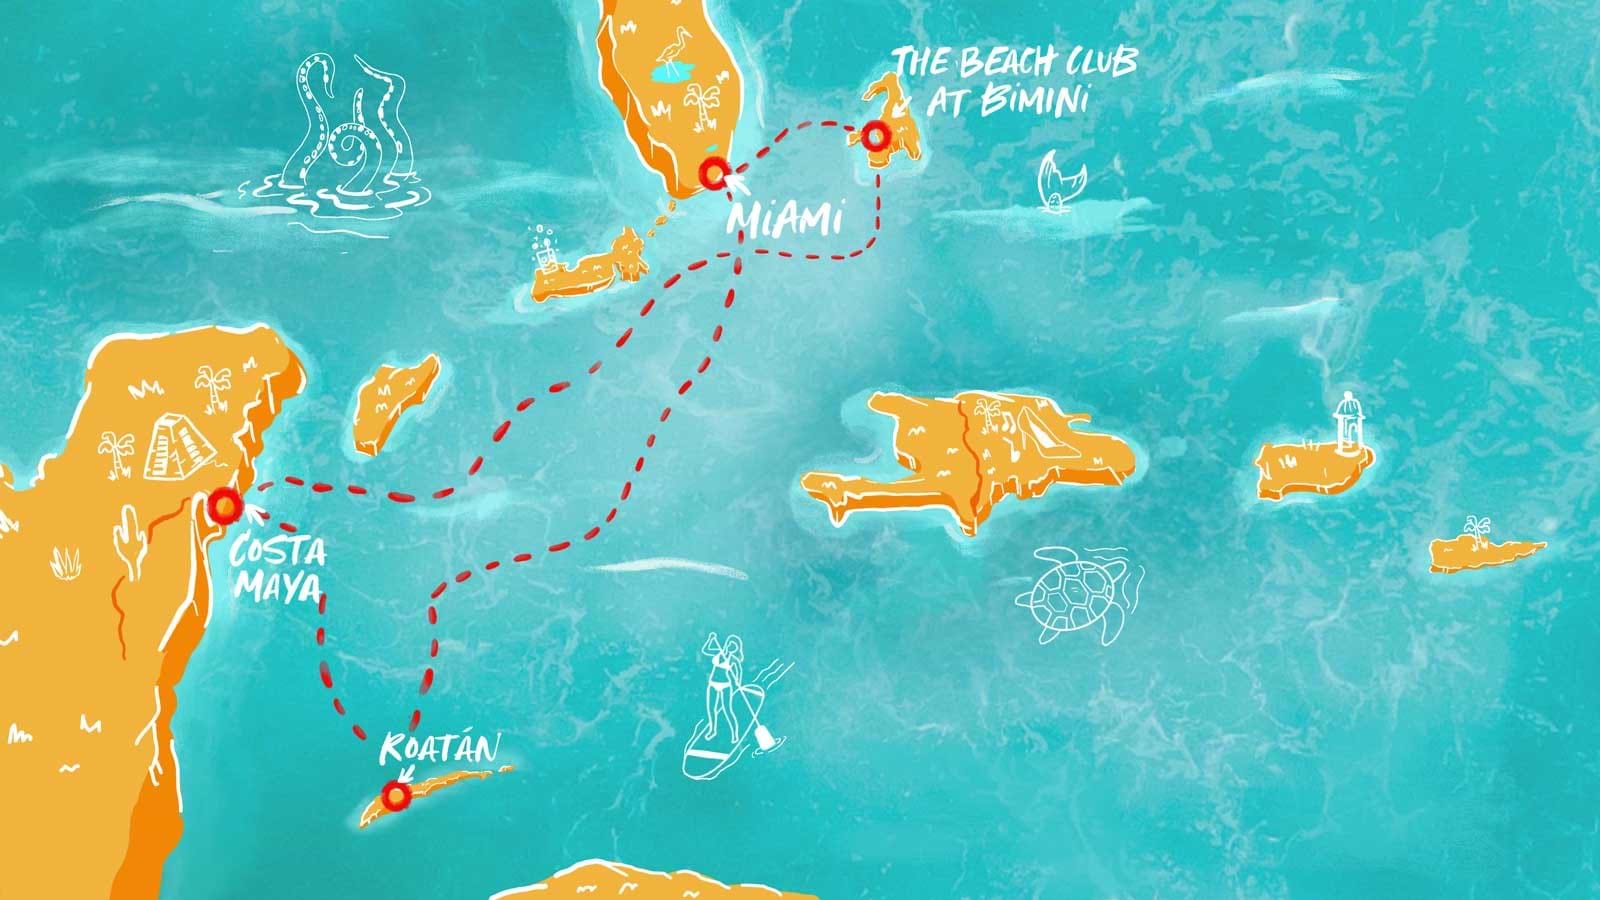 Western Caribbean Charm 6-night itinerary
Caribbean maps and itinerary 16x9